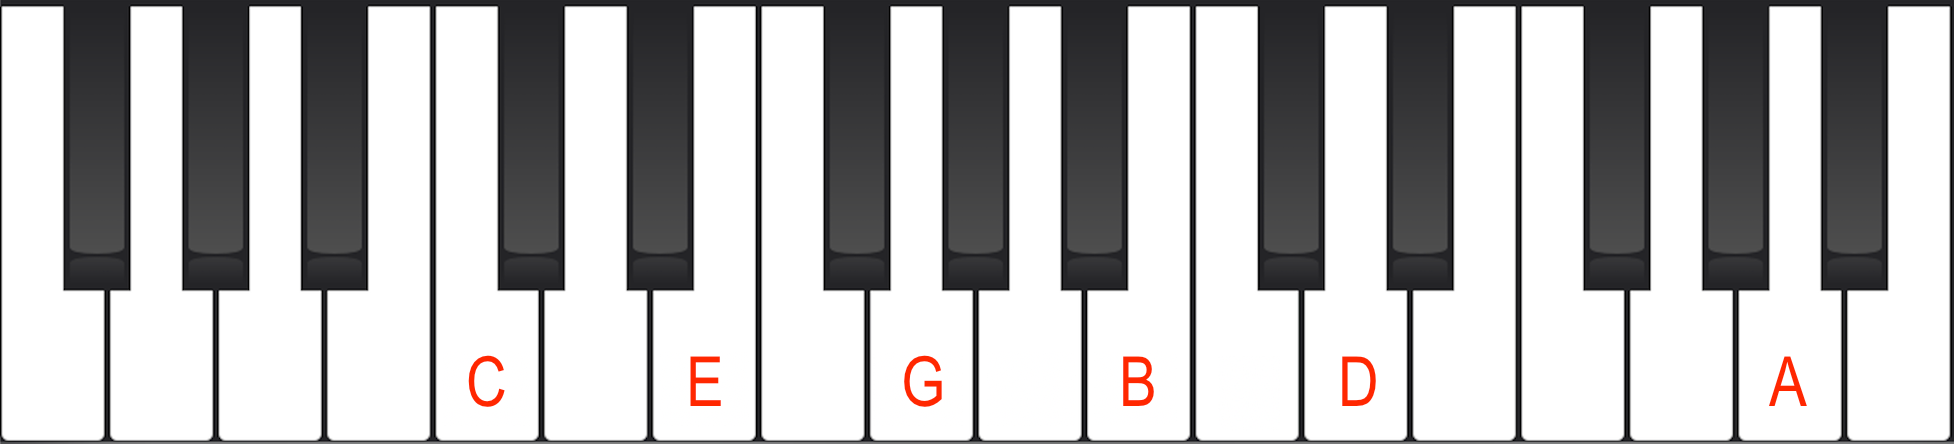 Cmaj13 7th chord voicing on Piano